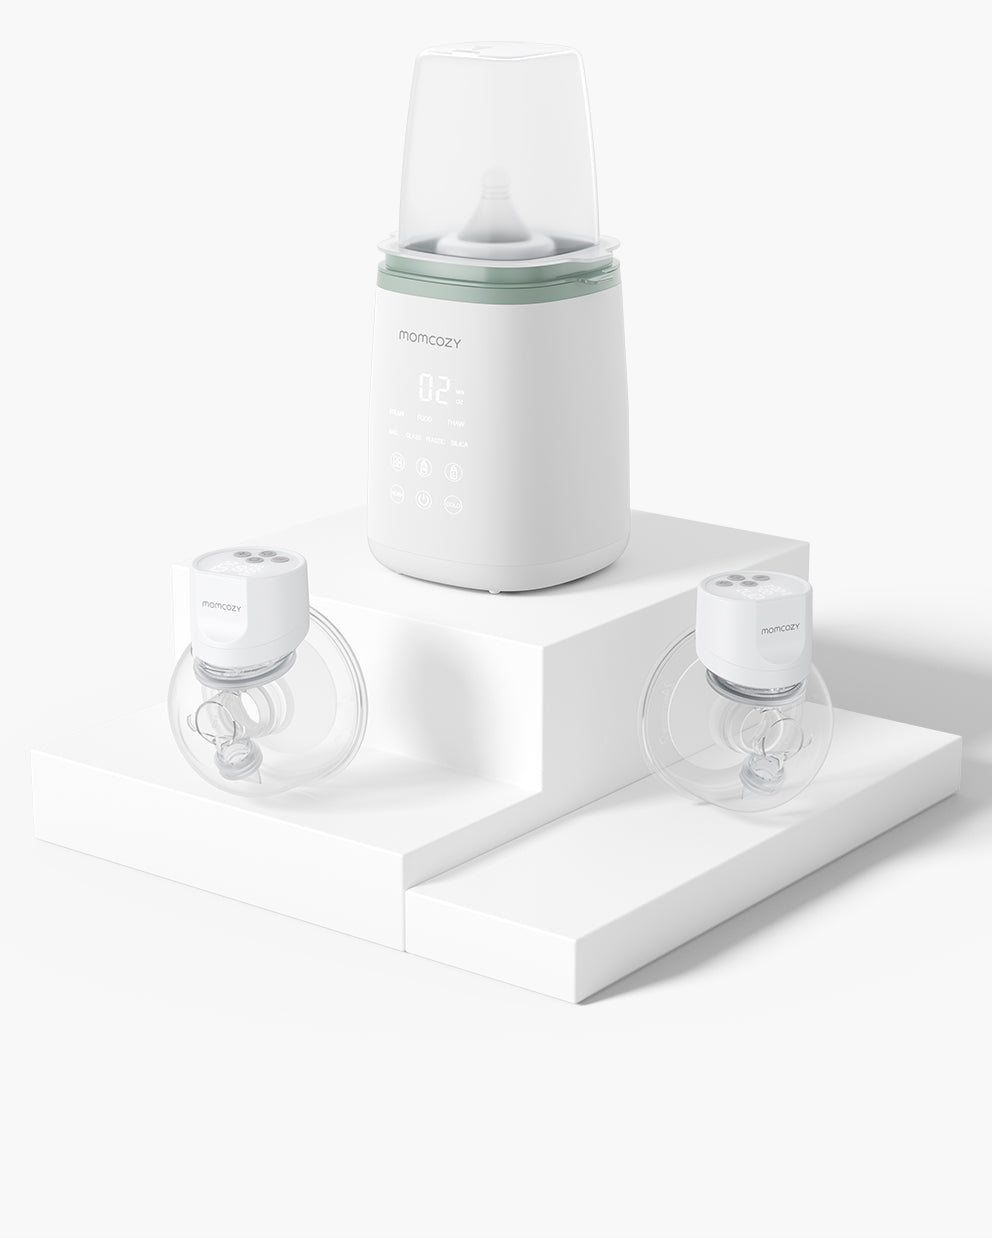 Momcozy Warming Lactation Massager 2-in-1 & Momcozy Smart Baby Bottle Warmer